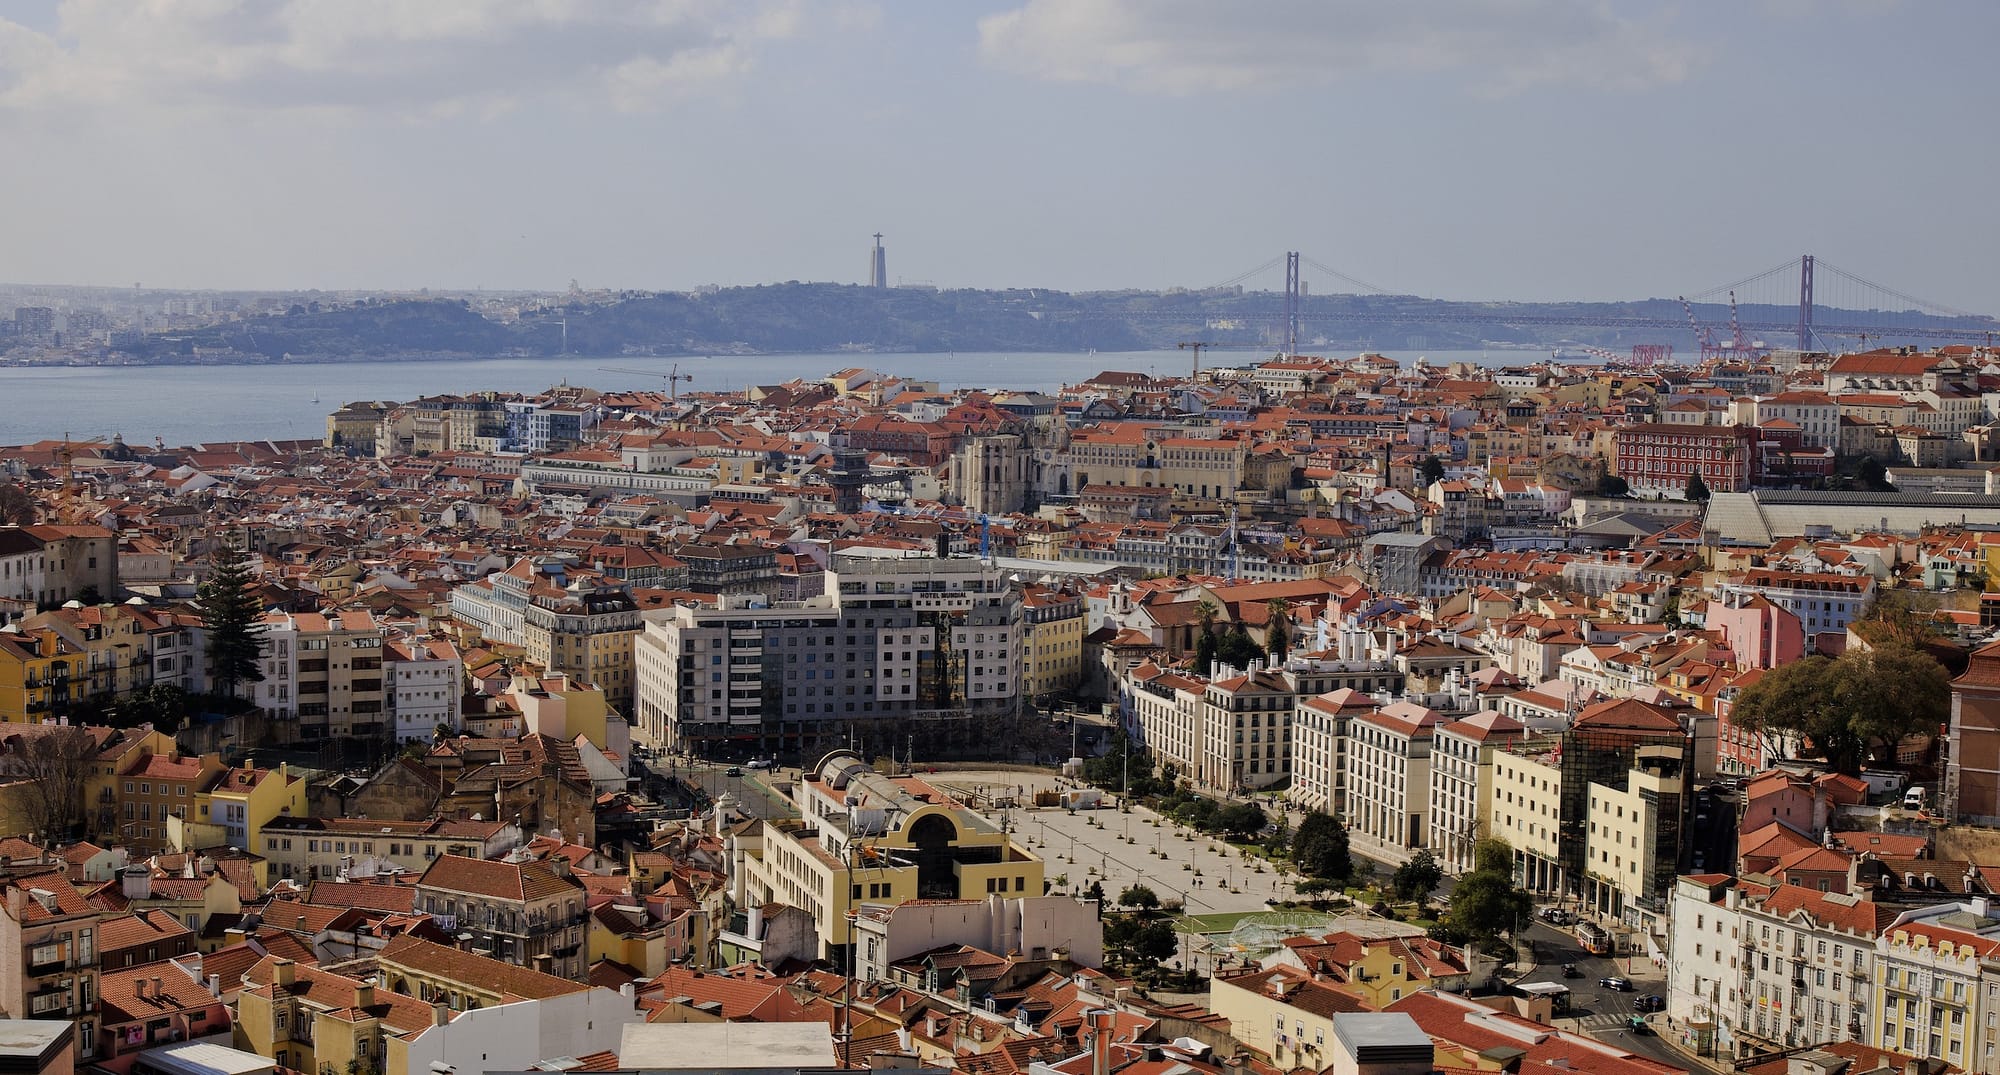 Kota teraman bagi pengembara digital adalah Lisbon, Portugal